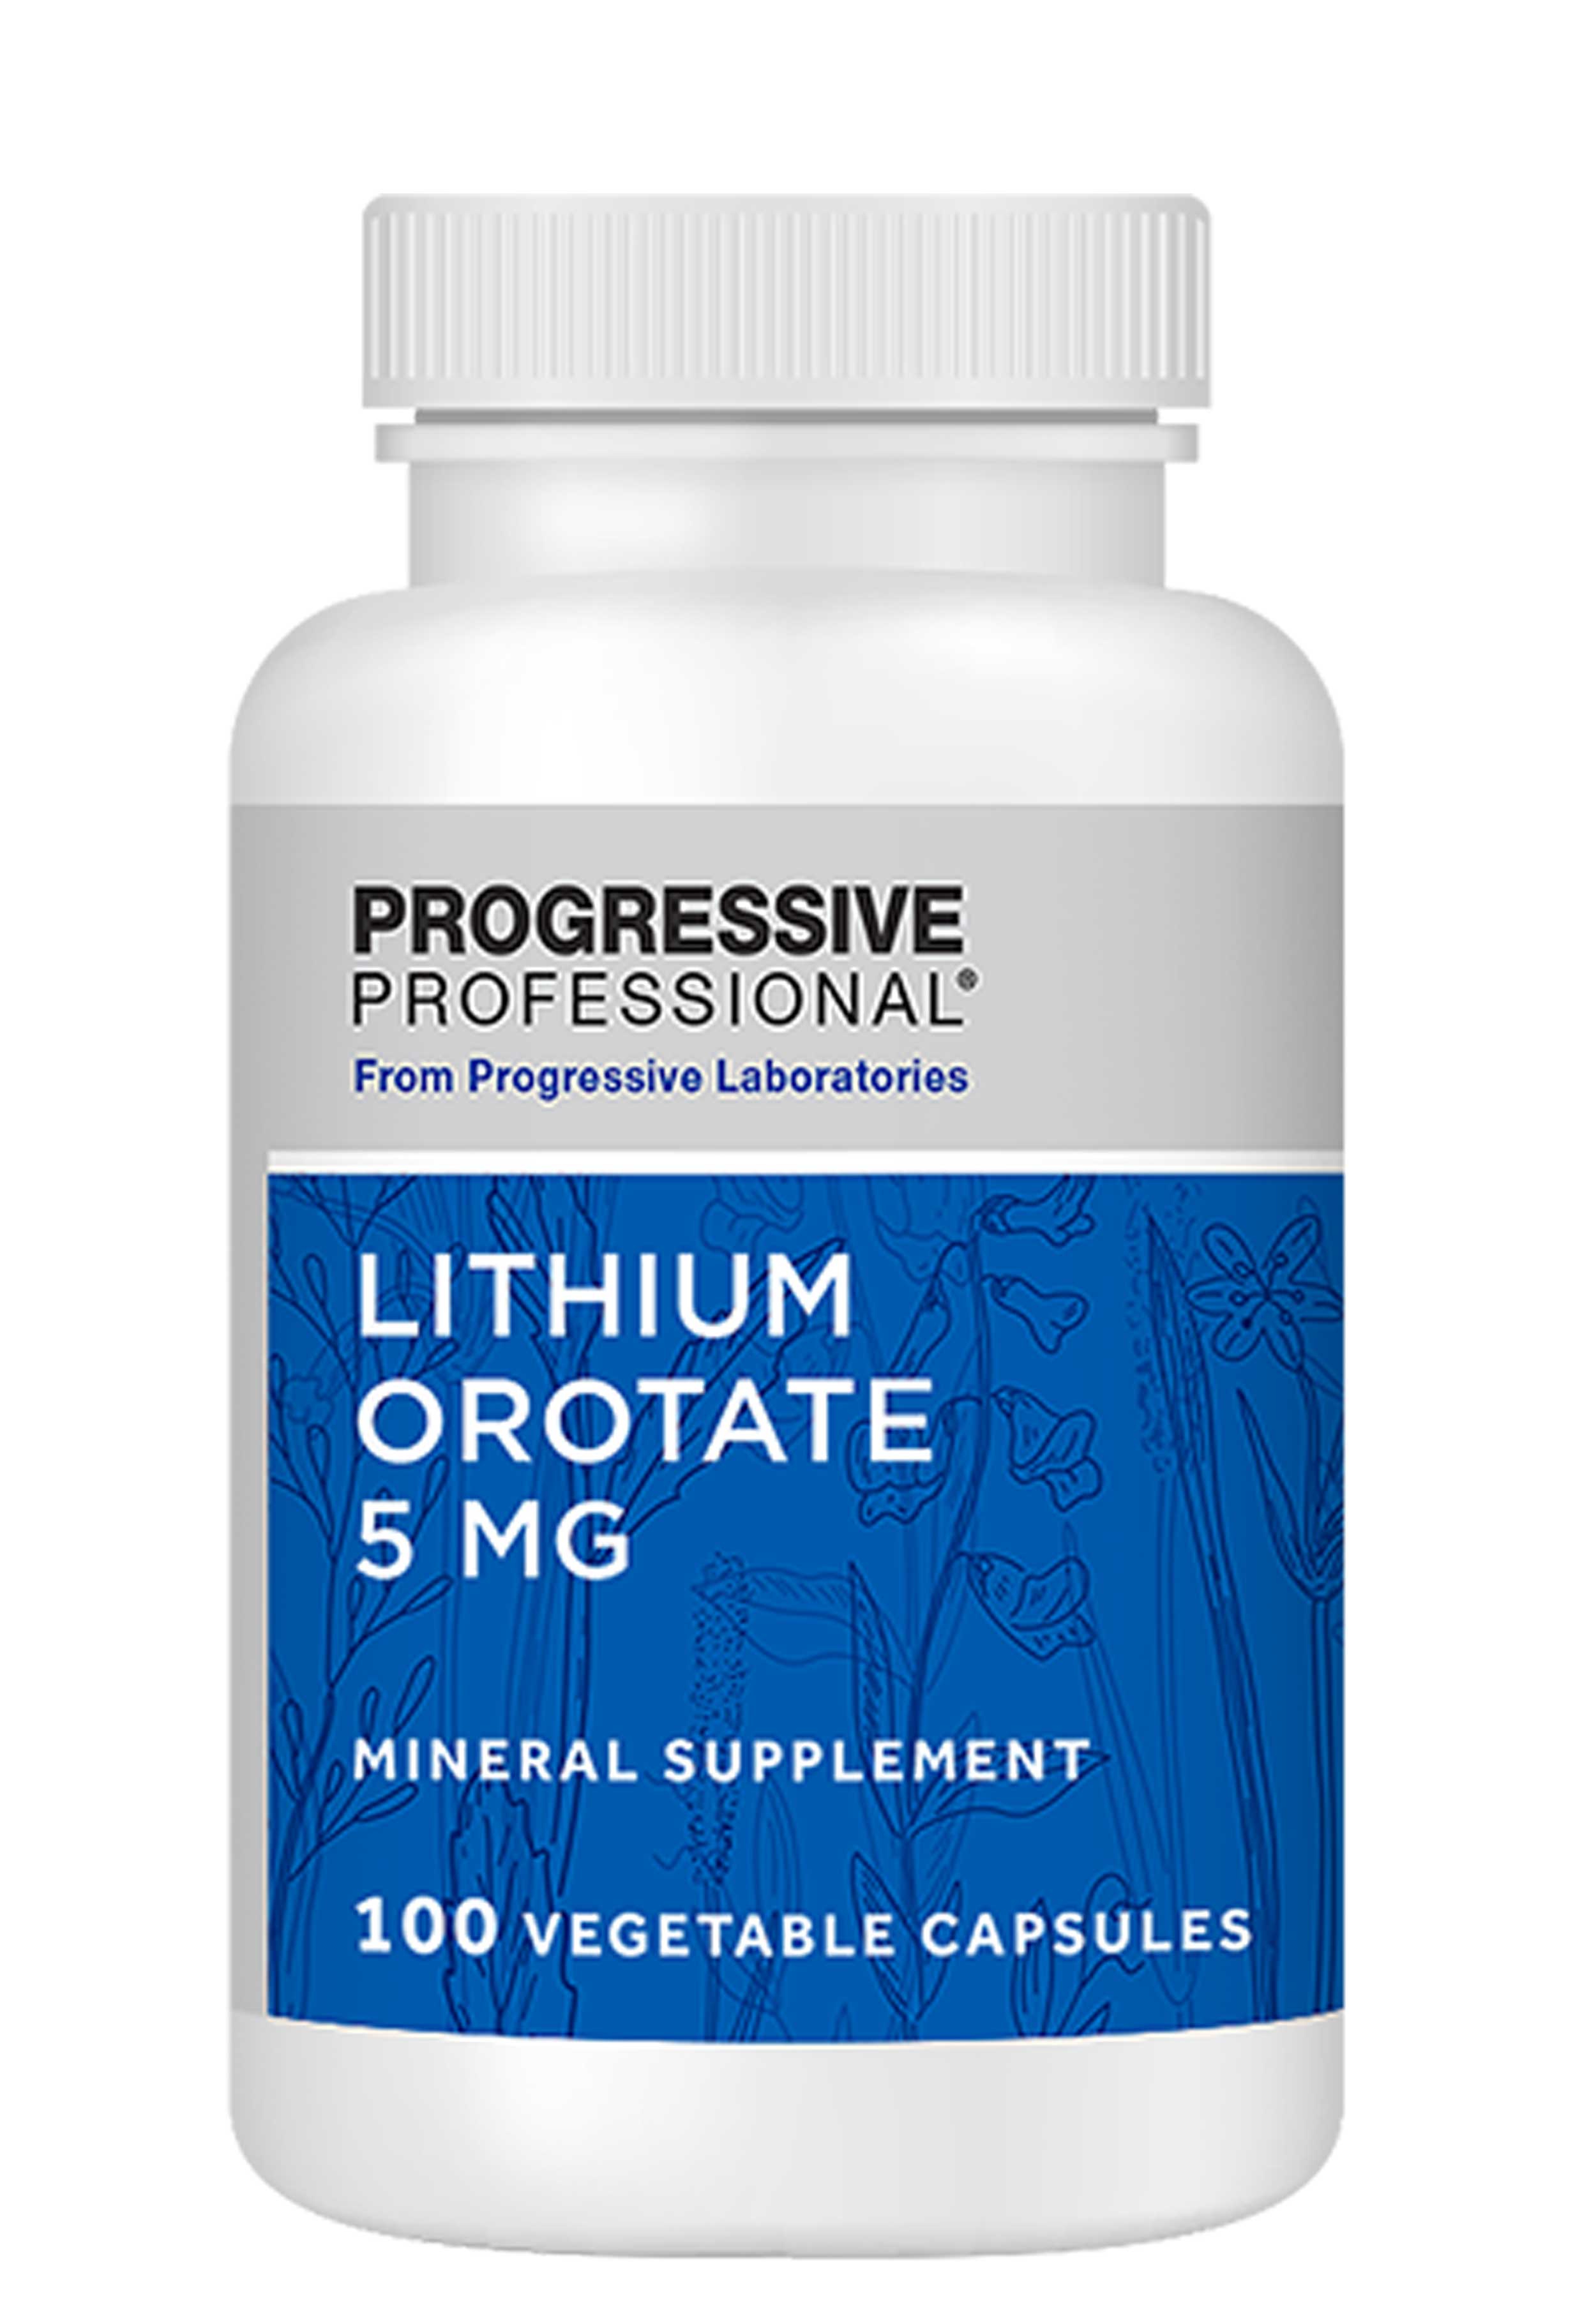 Progressive Laboratories Lithium Orotate